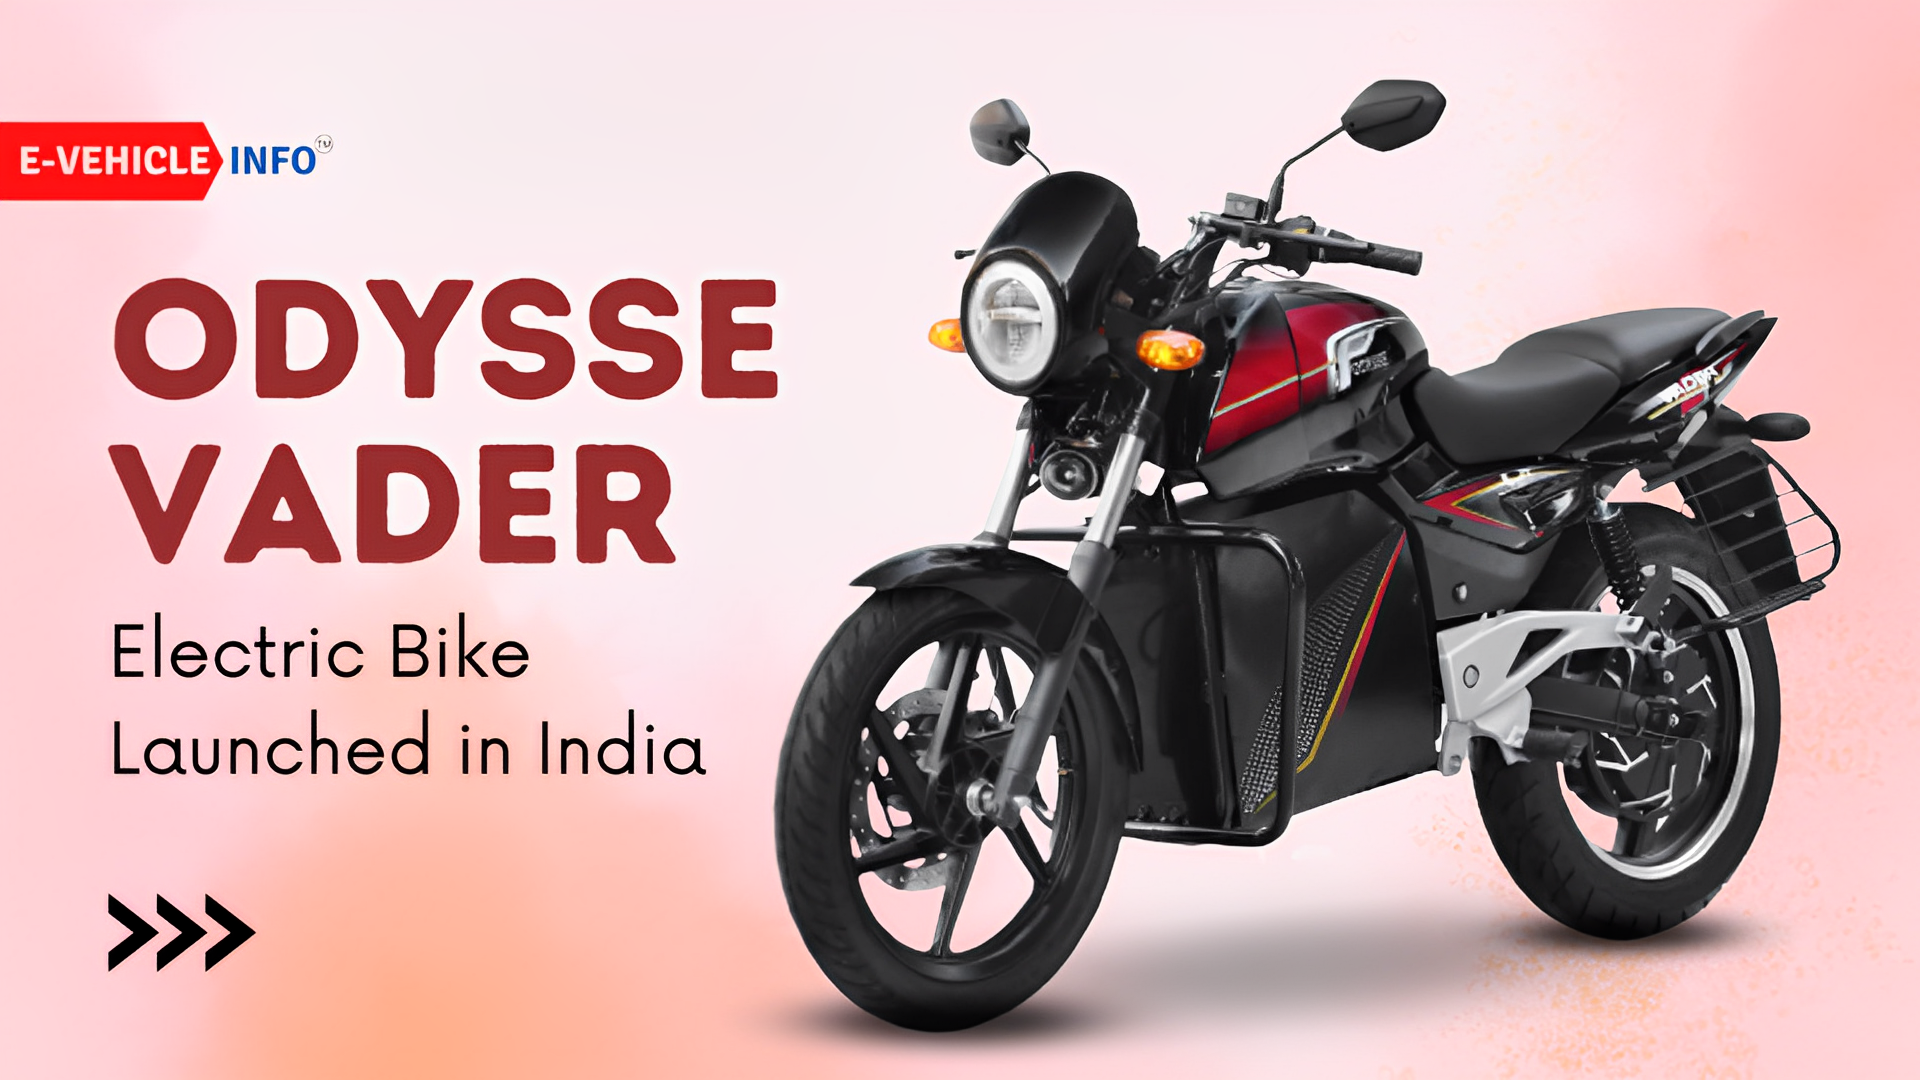 Odysse Vader Electric Motorcycle